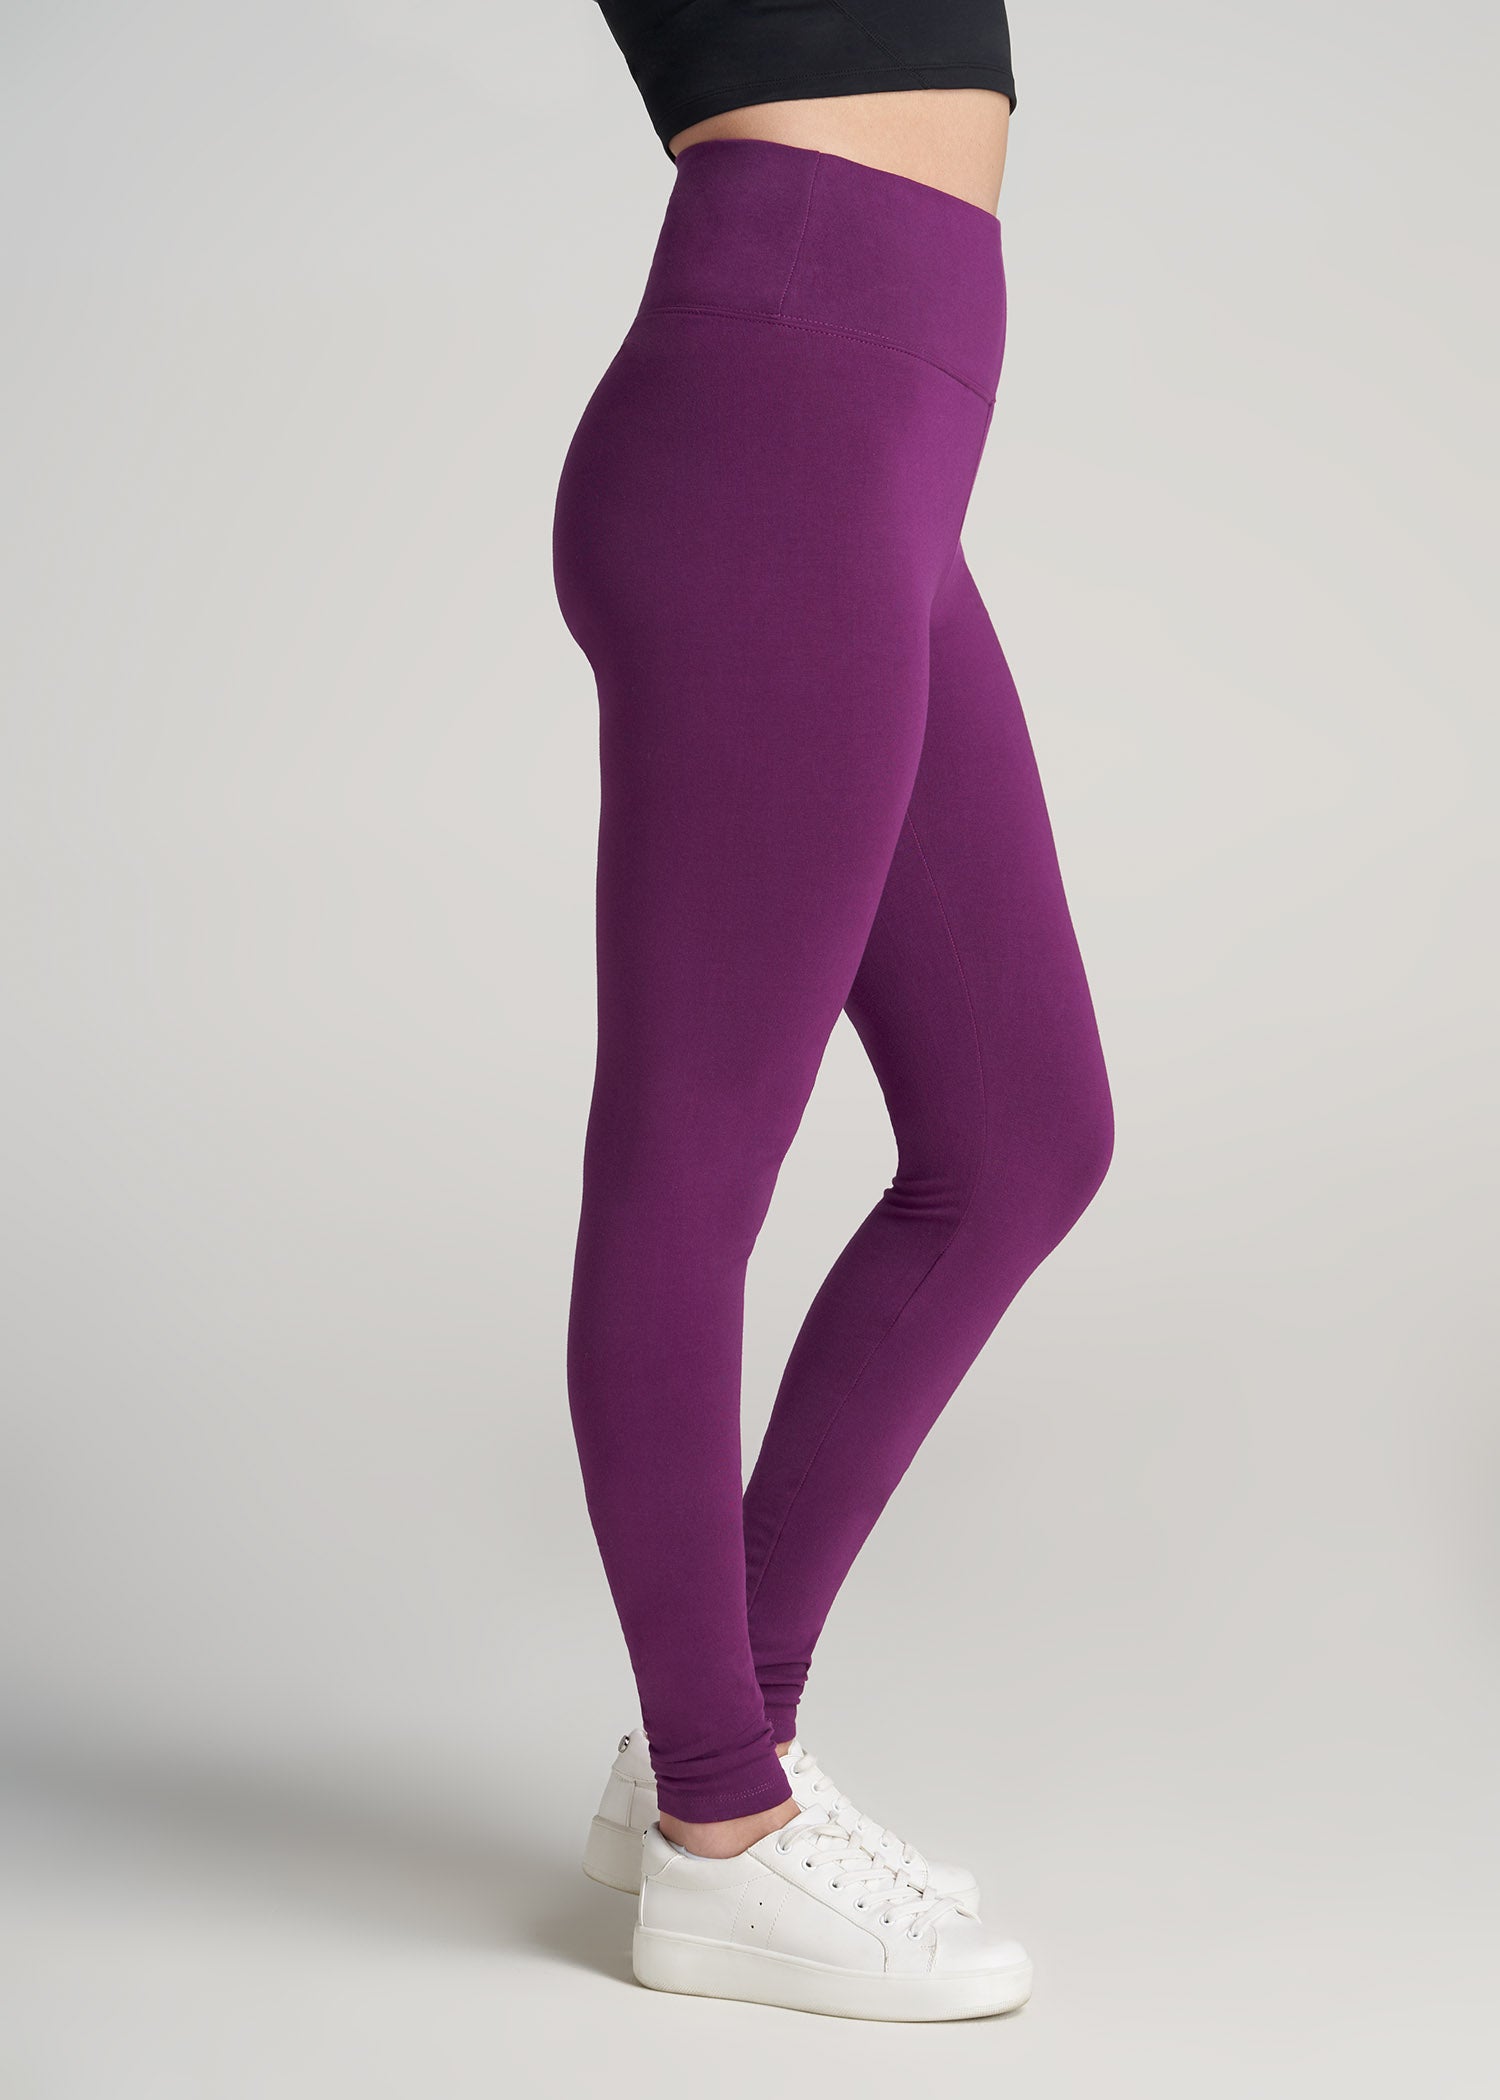 Long Tall Sally - LTS Tall Dark Cord Leggings - Women's Purple